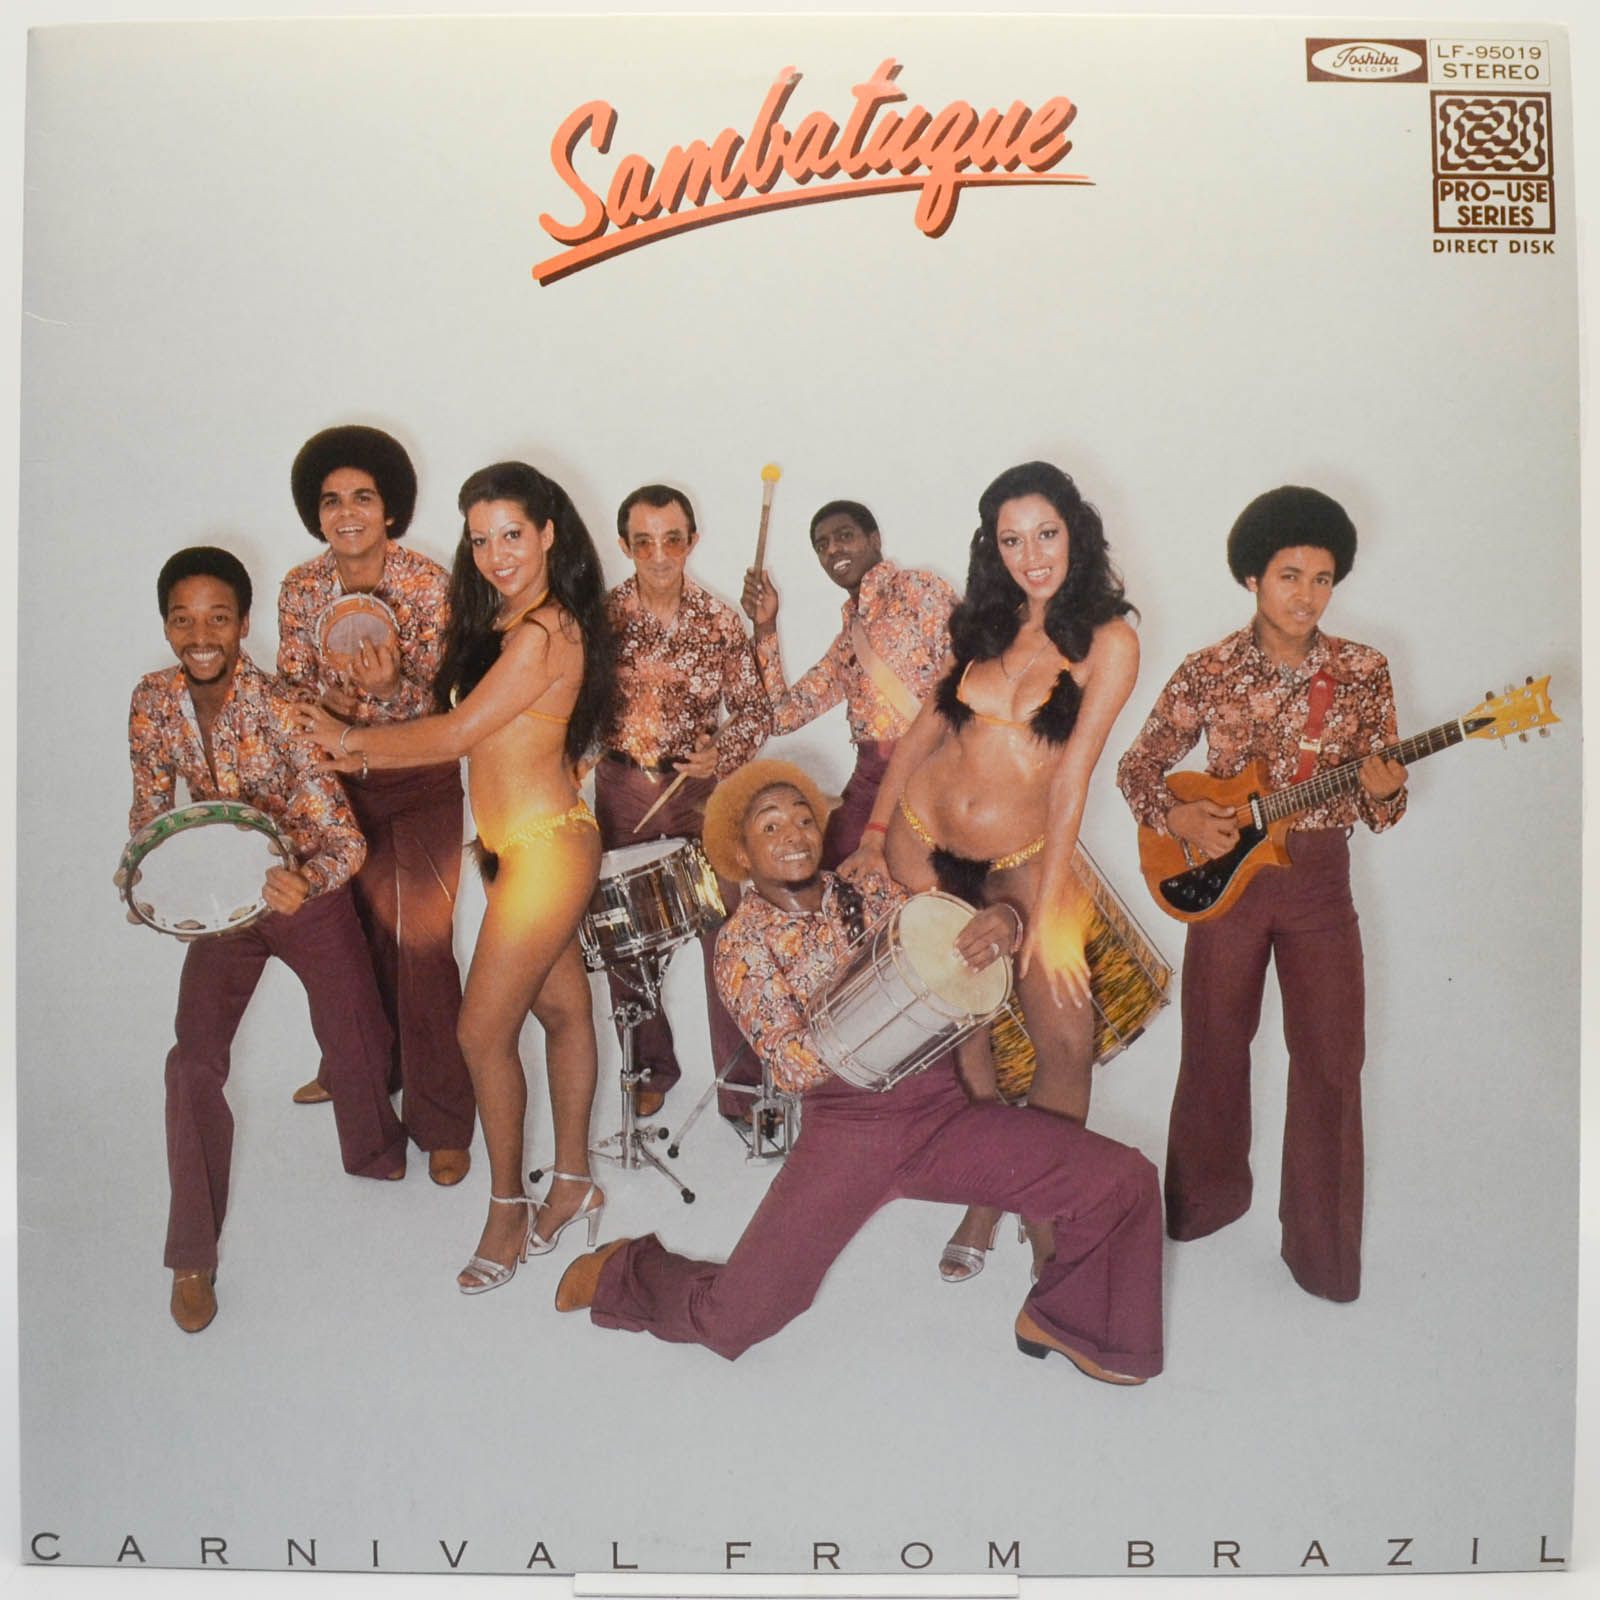 Sambatuque — Carnival From Brazil, 1978